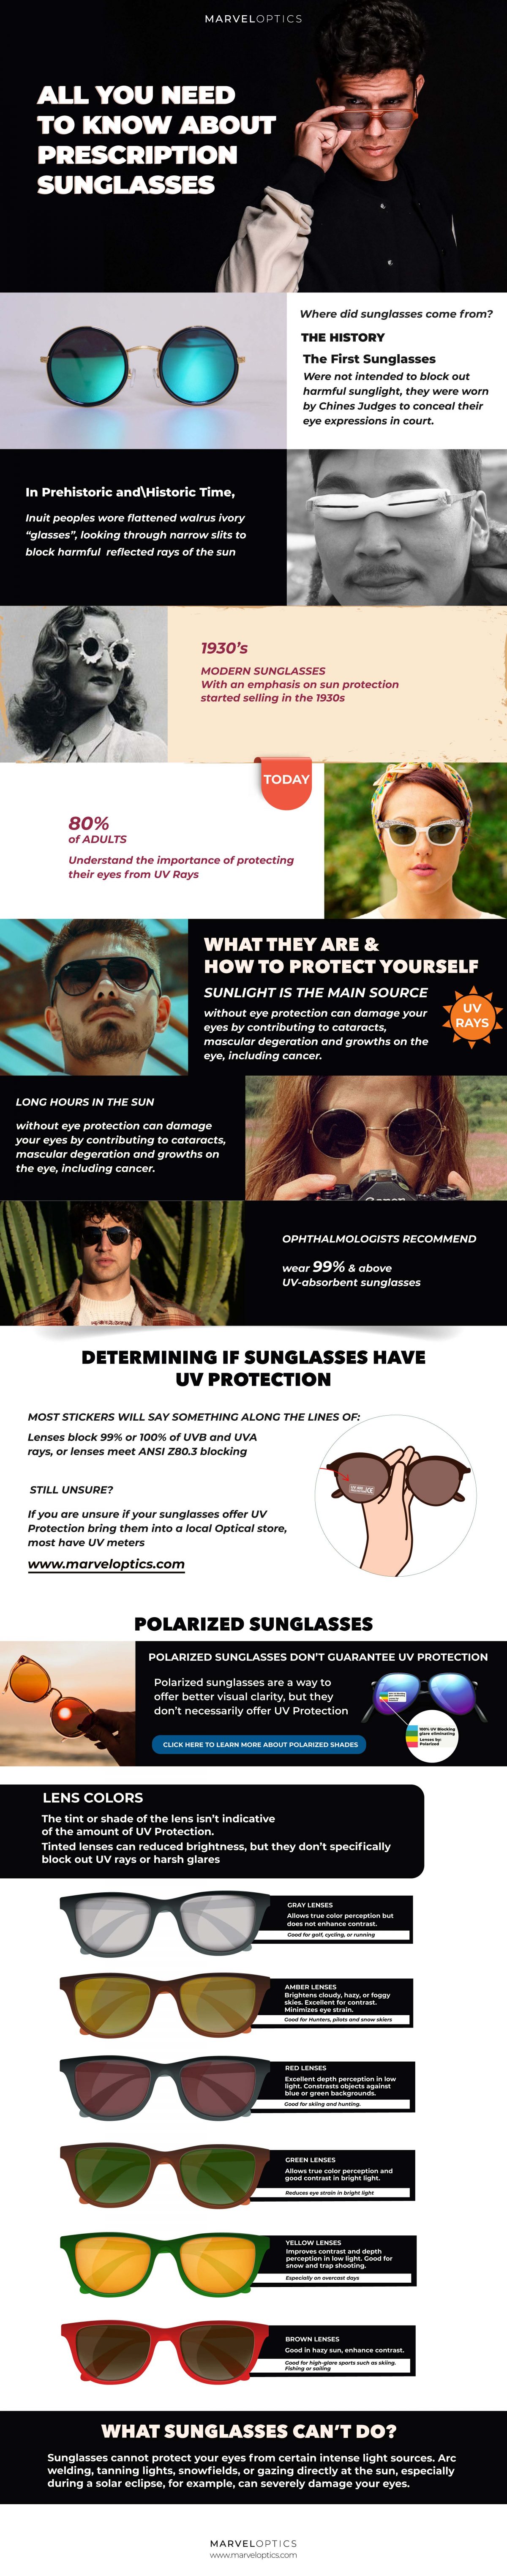 About Prescription Sunglasses infographic